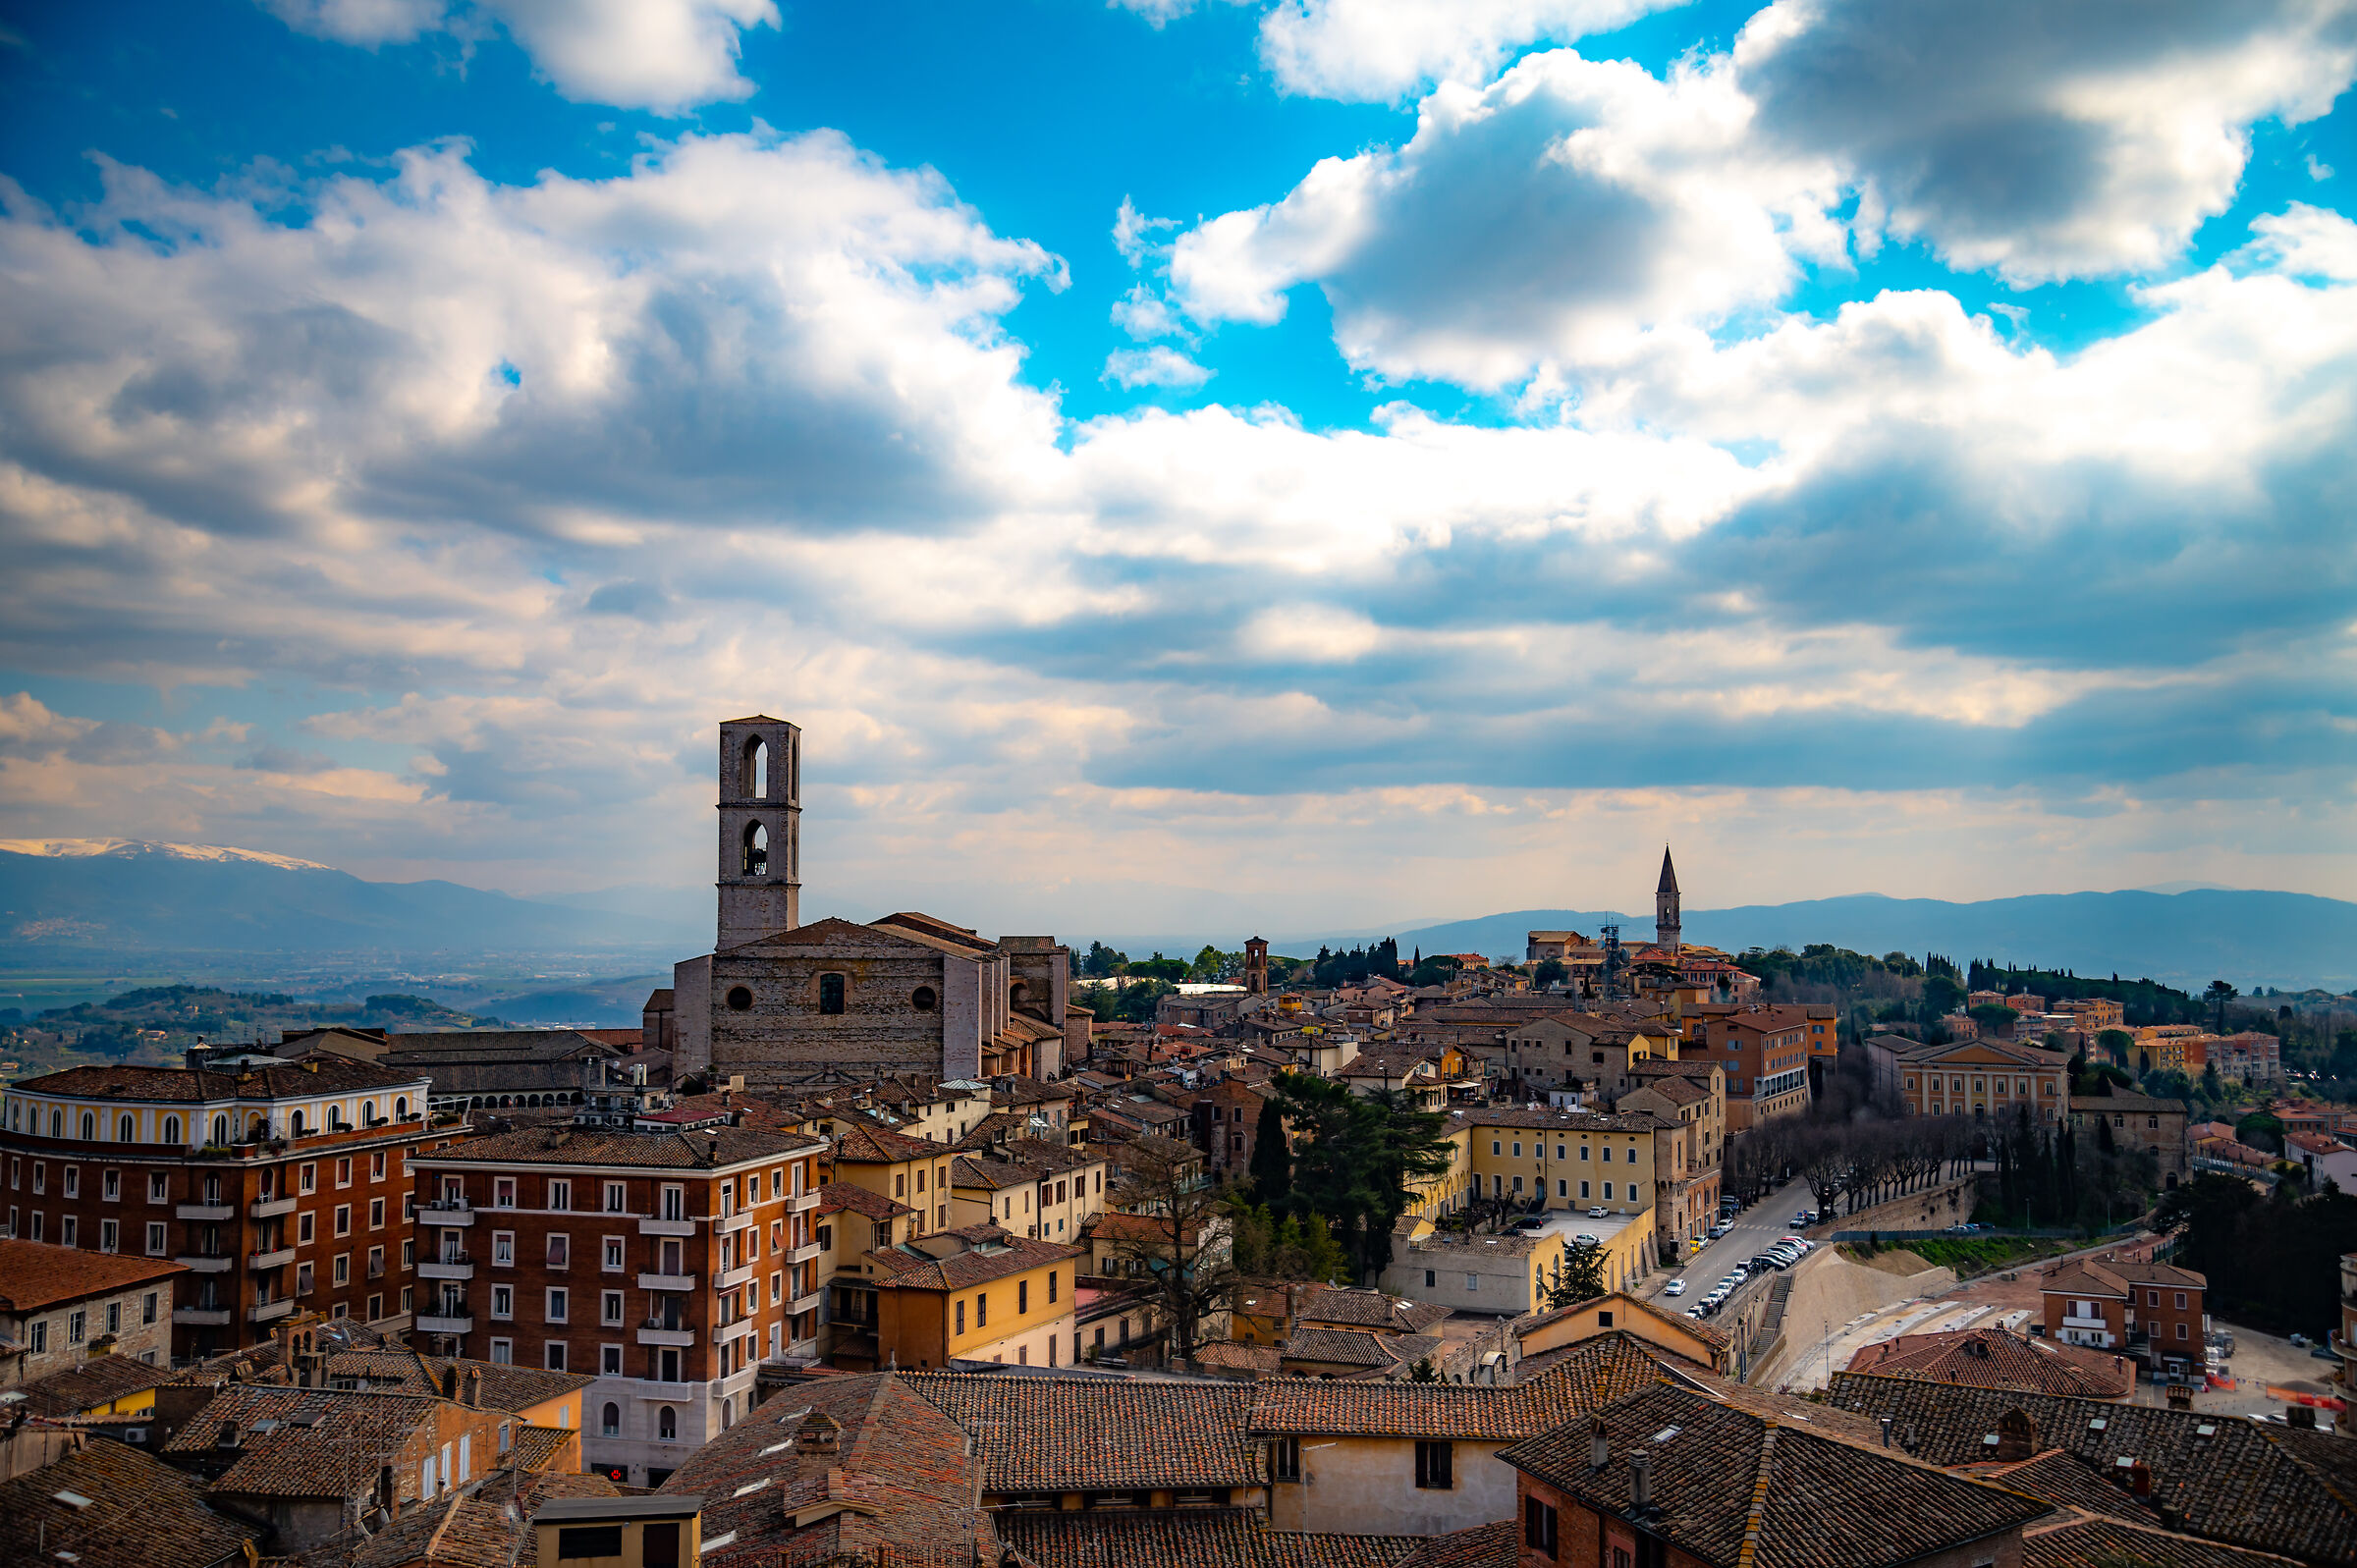 Perugia in color...